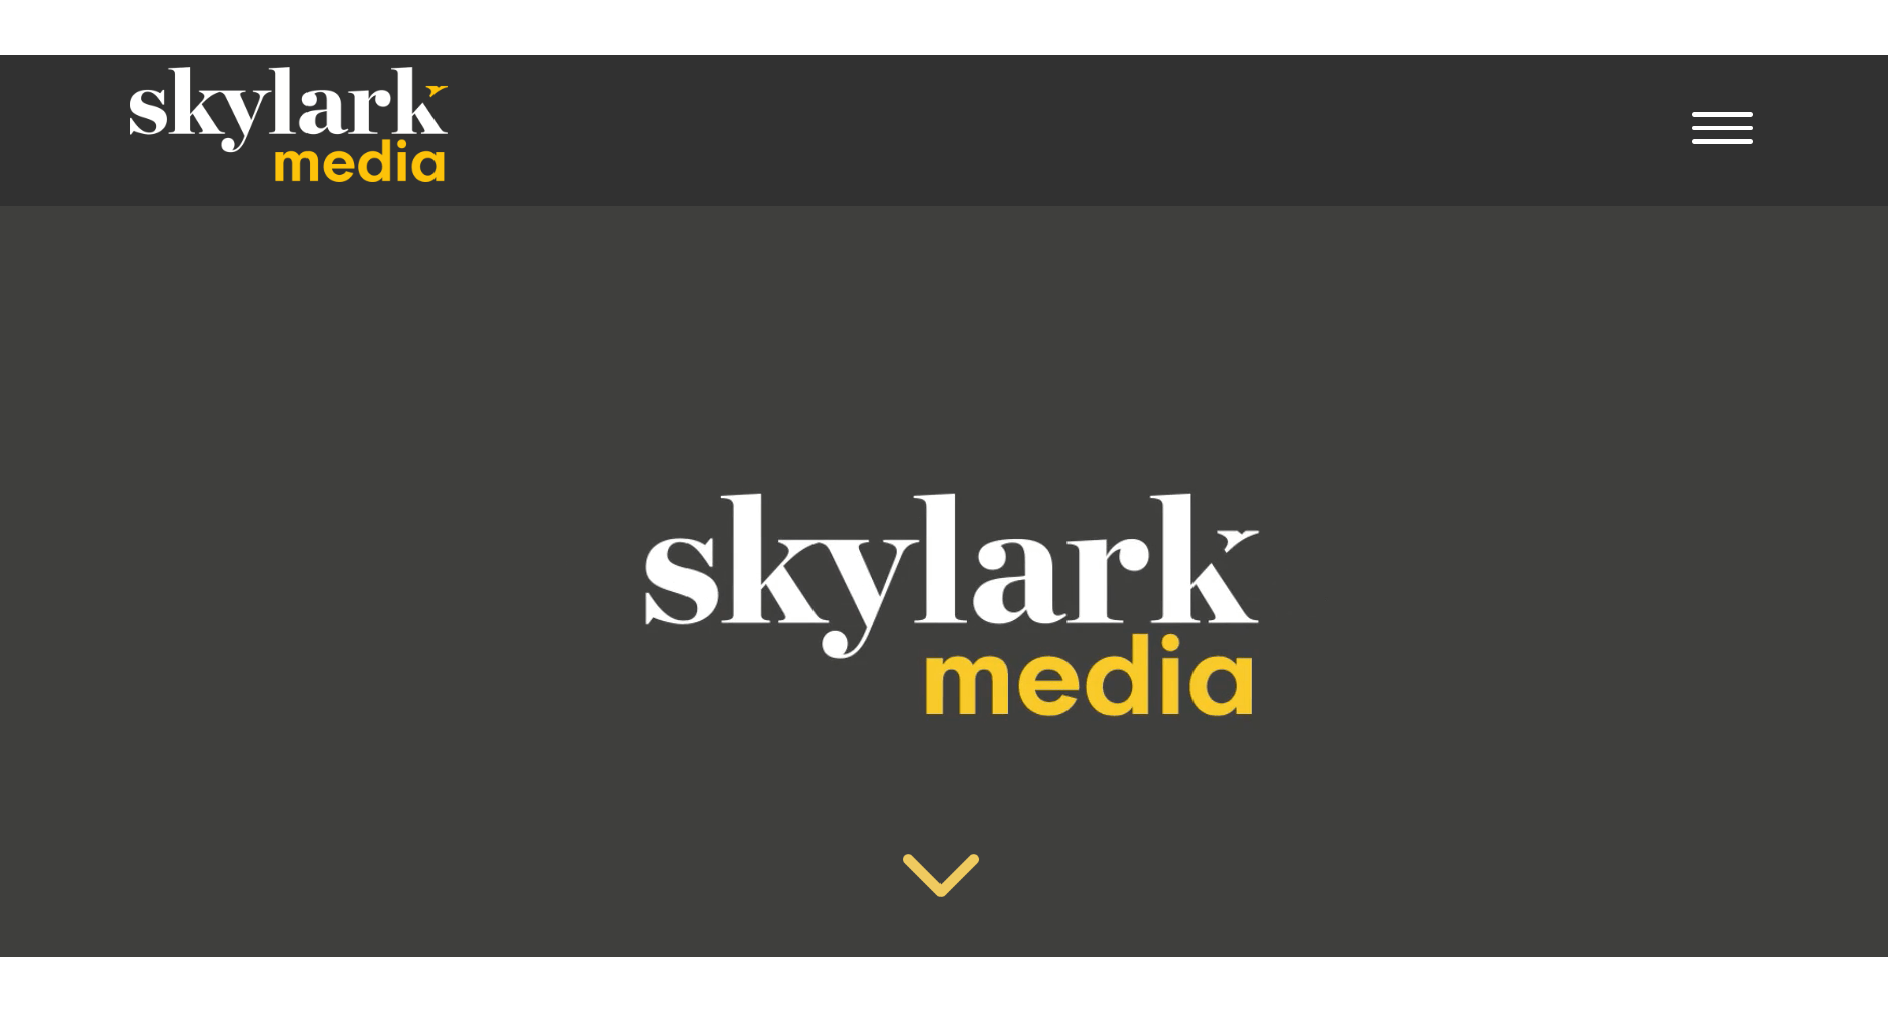 Skylark Media Video Marketing Agency